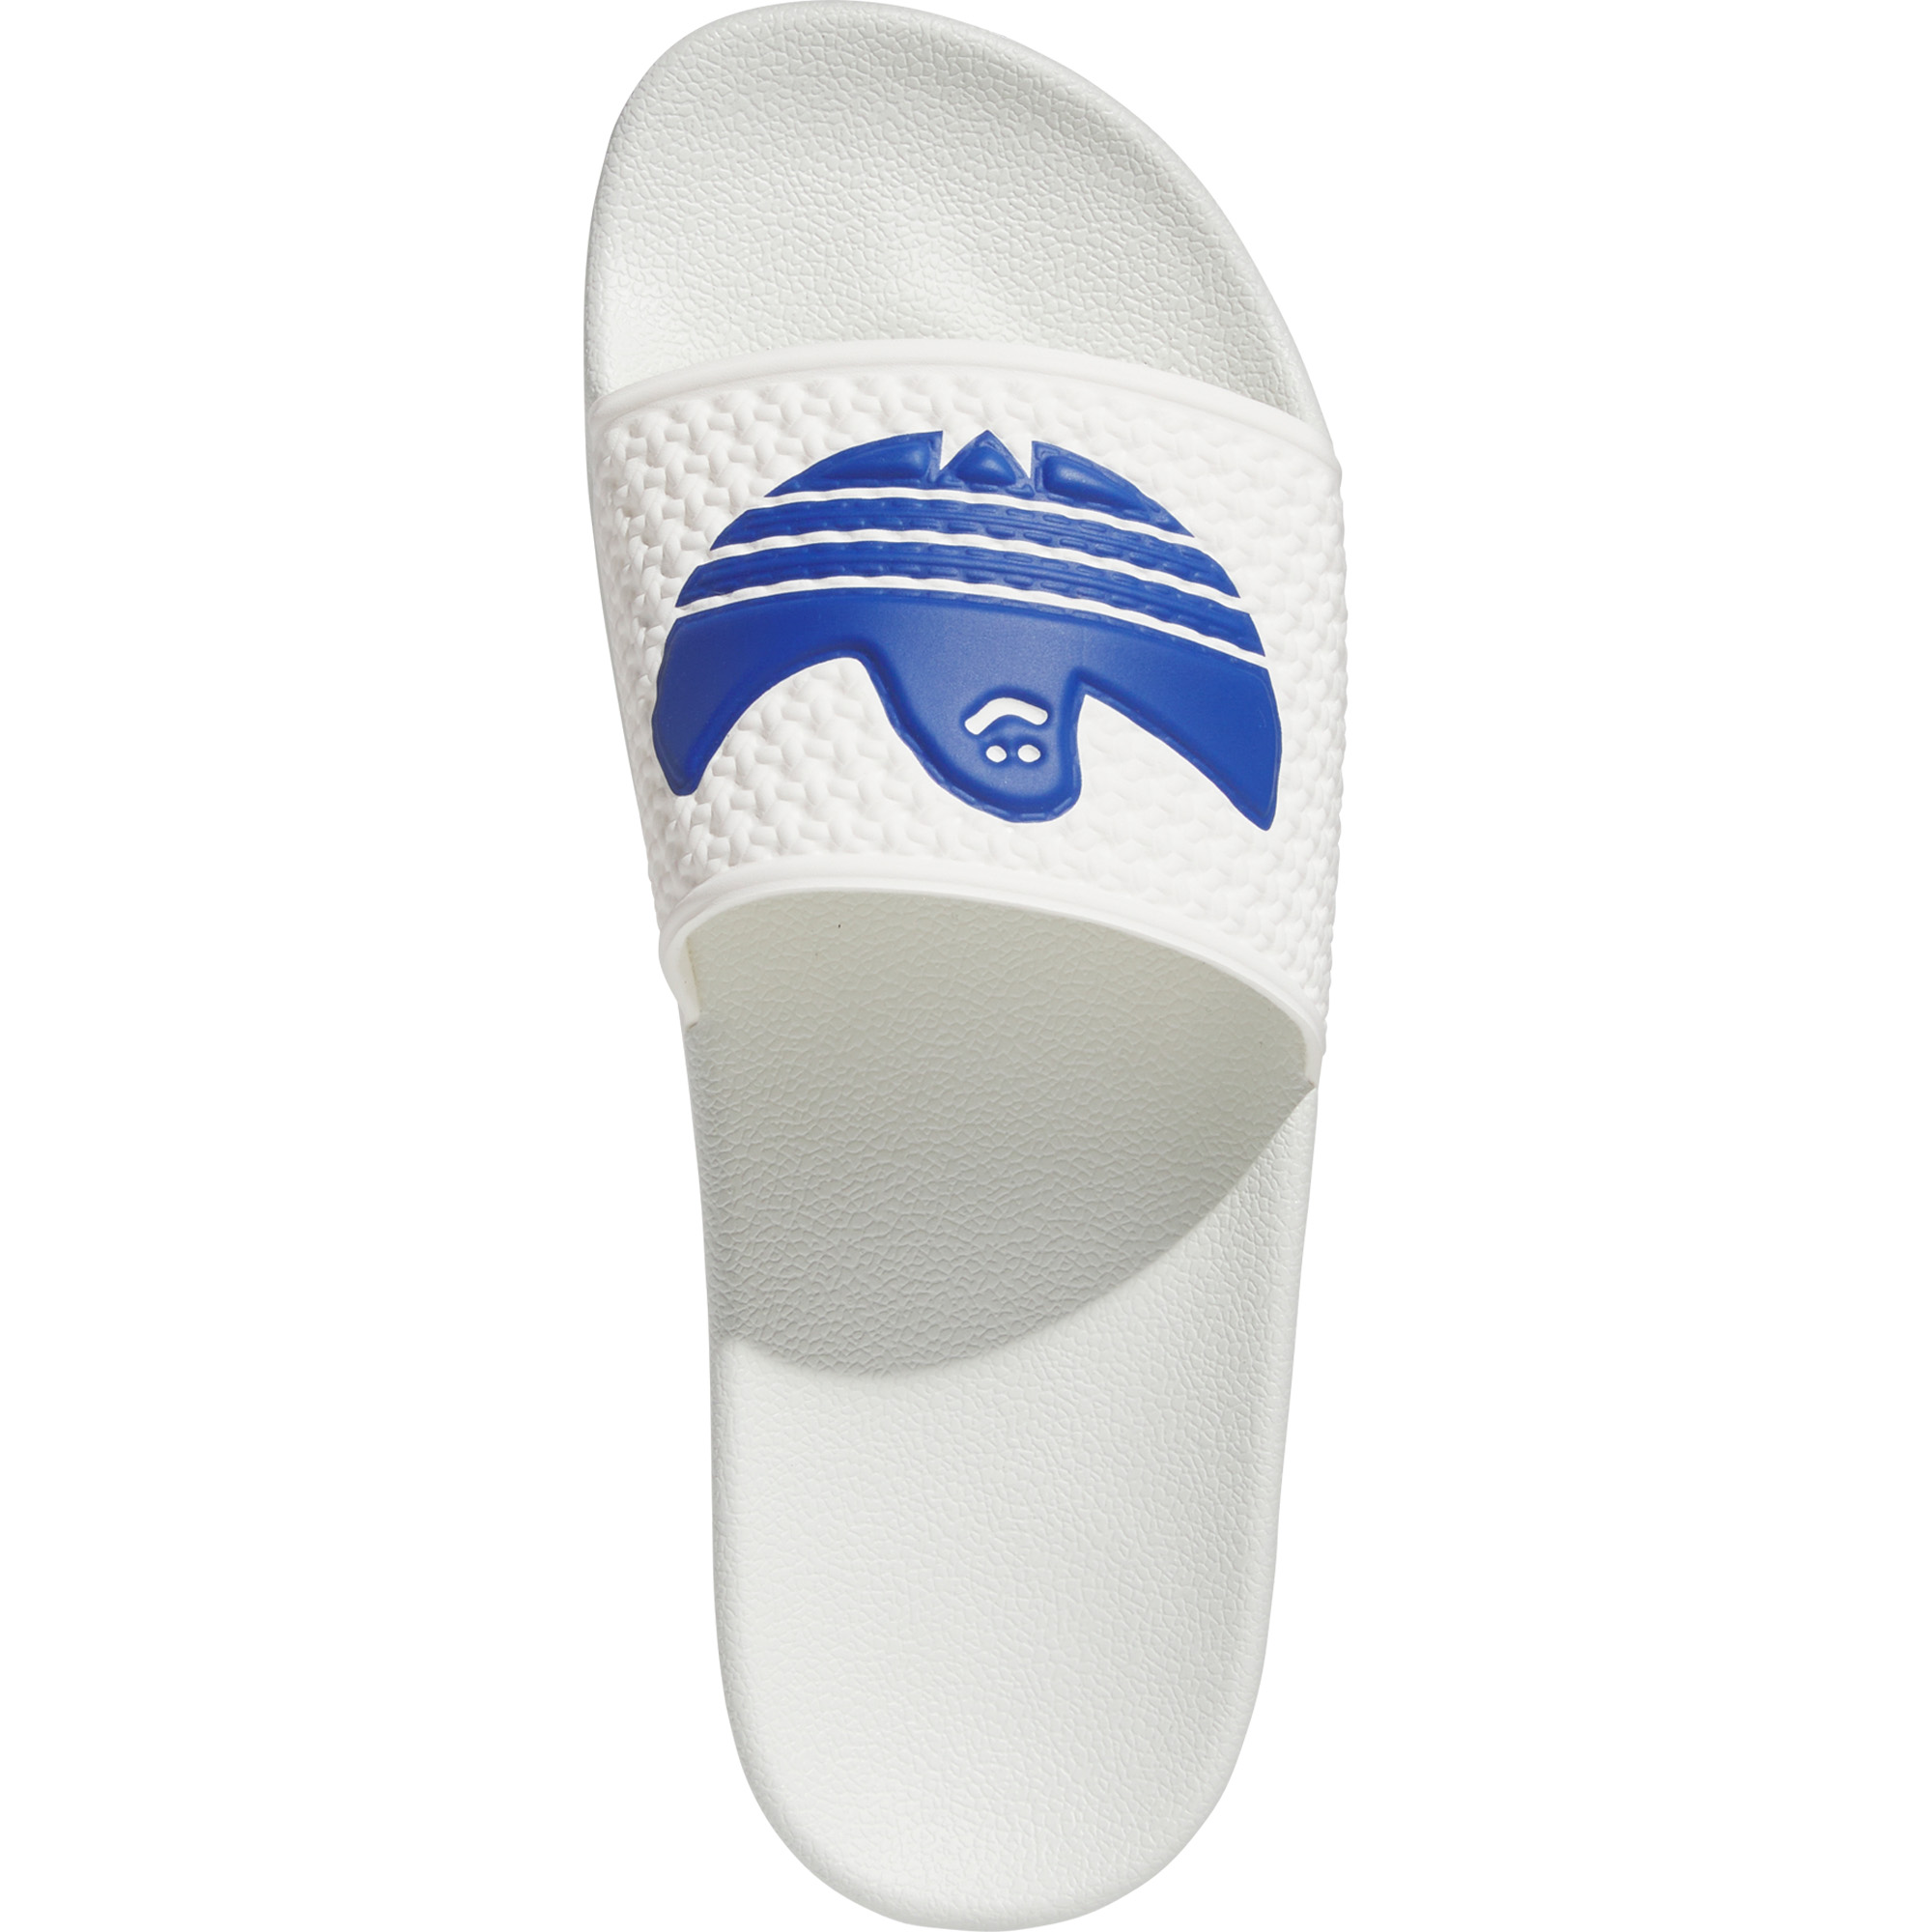 Adidas Shmoofoil Slide Men's Flip Flops